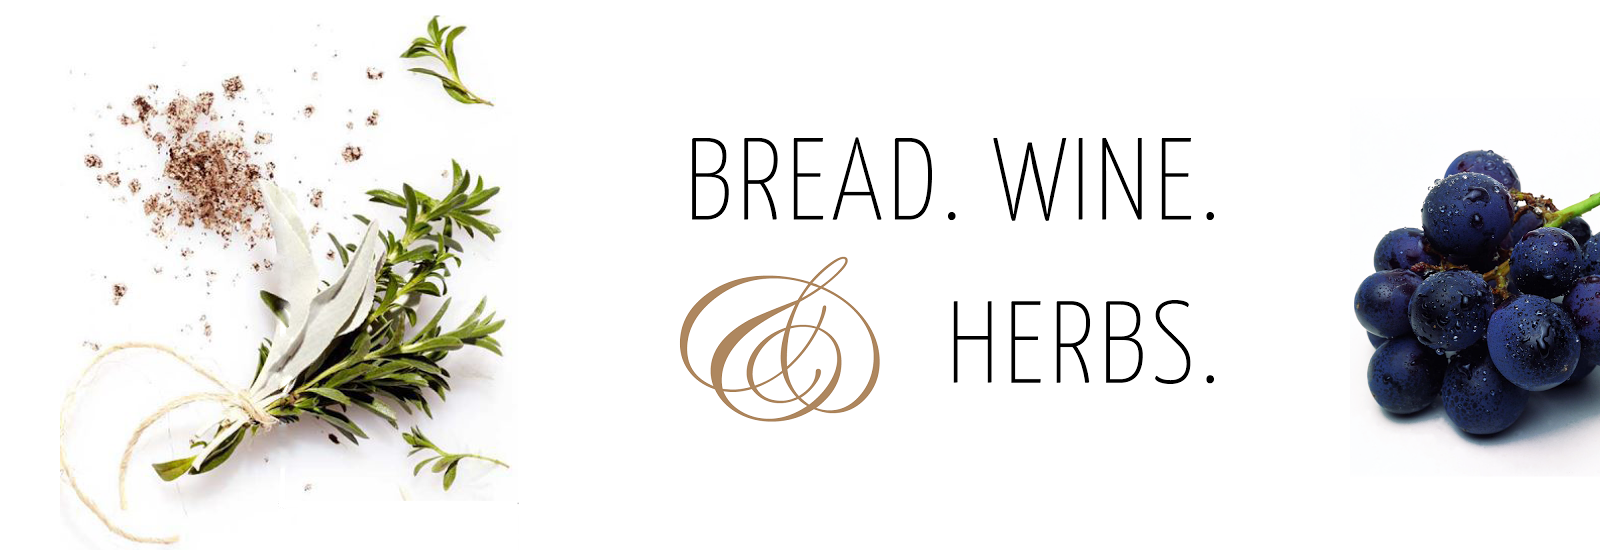 bread, wine & herbs